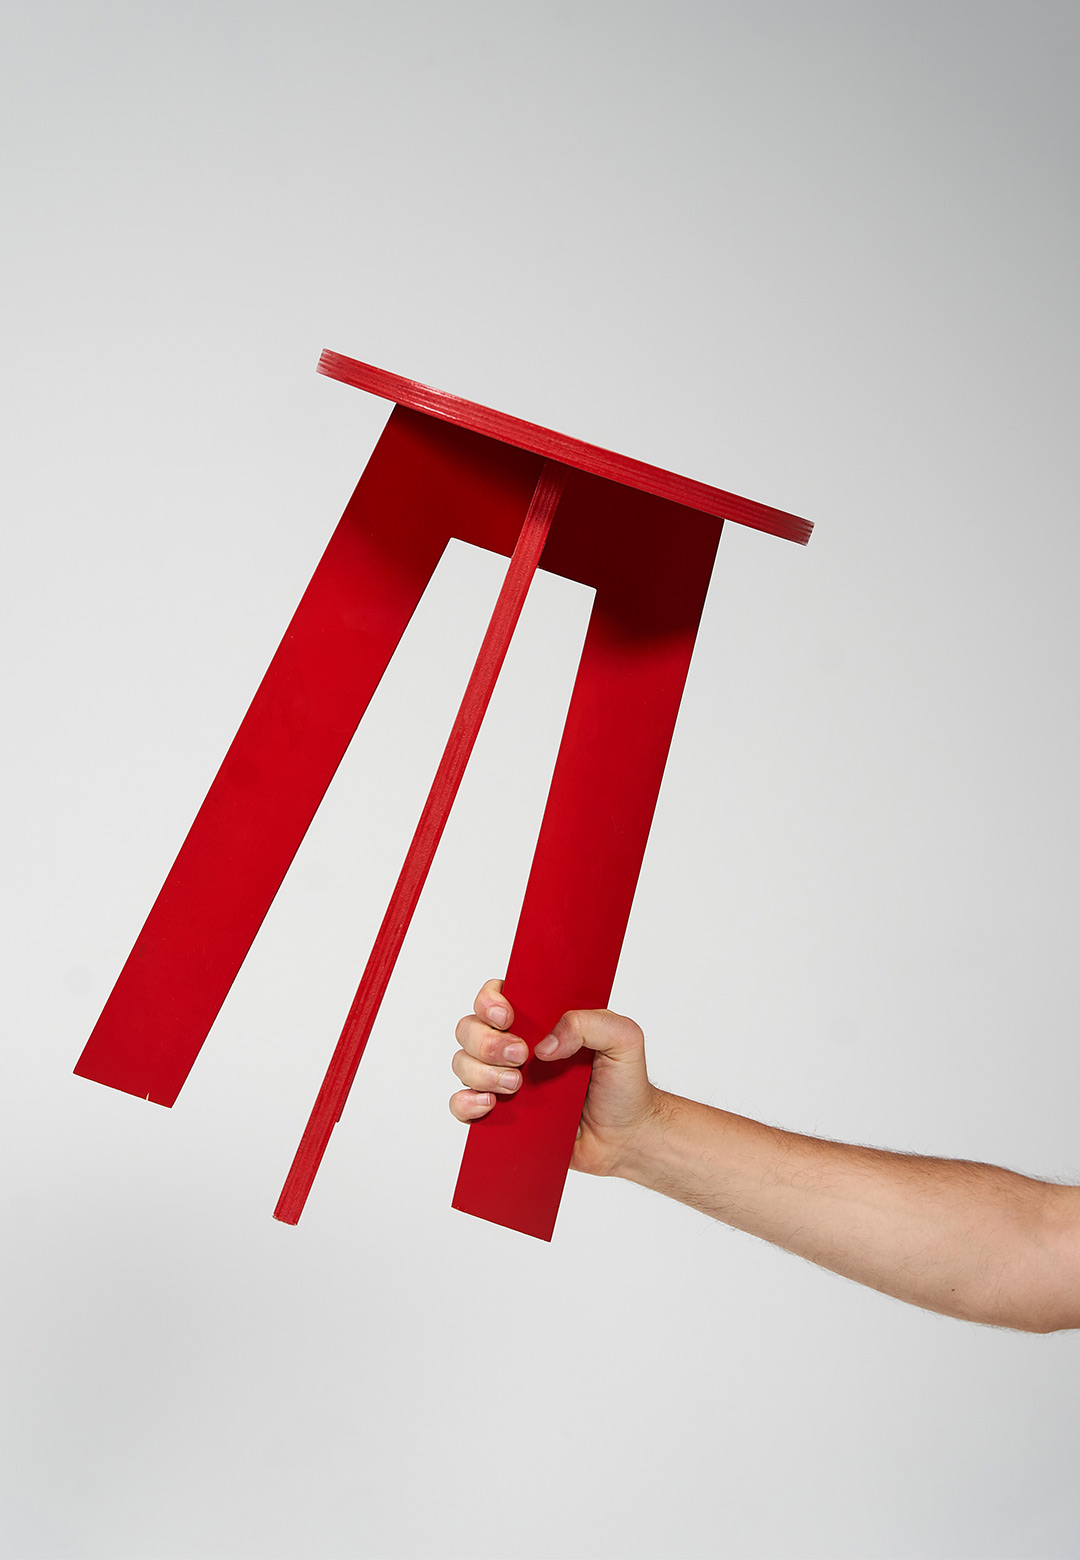 Nikolas Bentel and CANVAS design ‘The Emergency Stool’ for surprise plus-ones